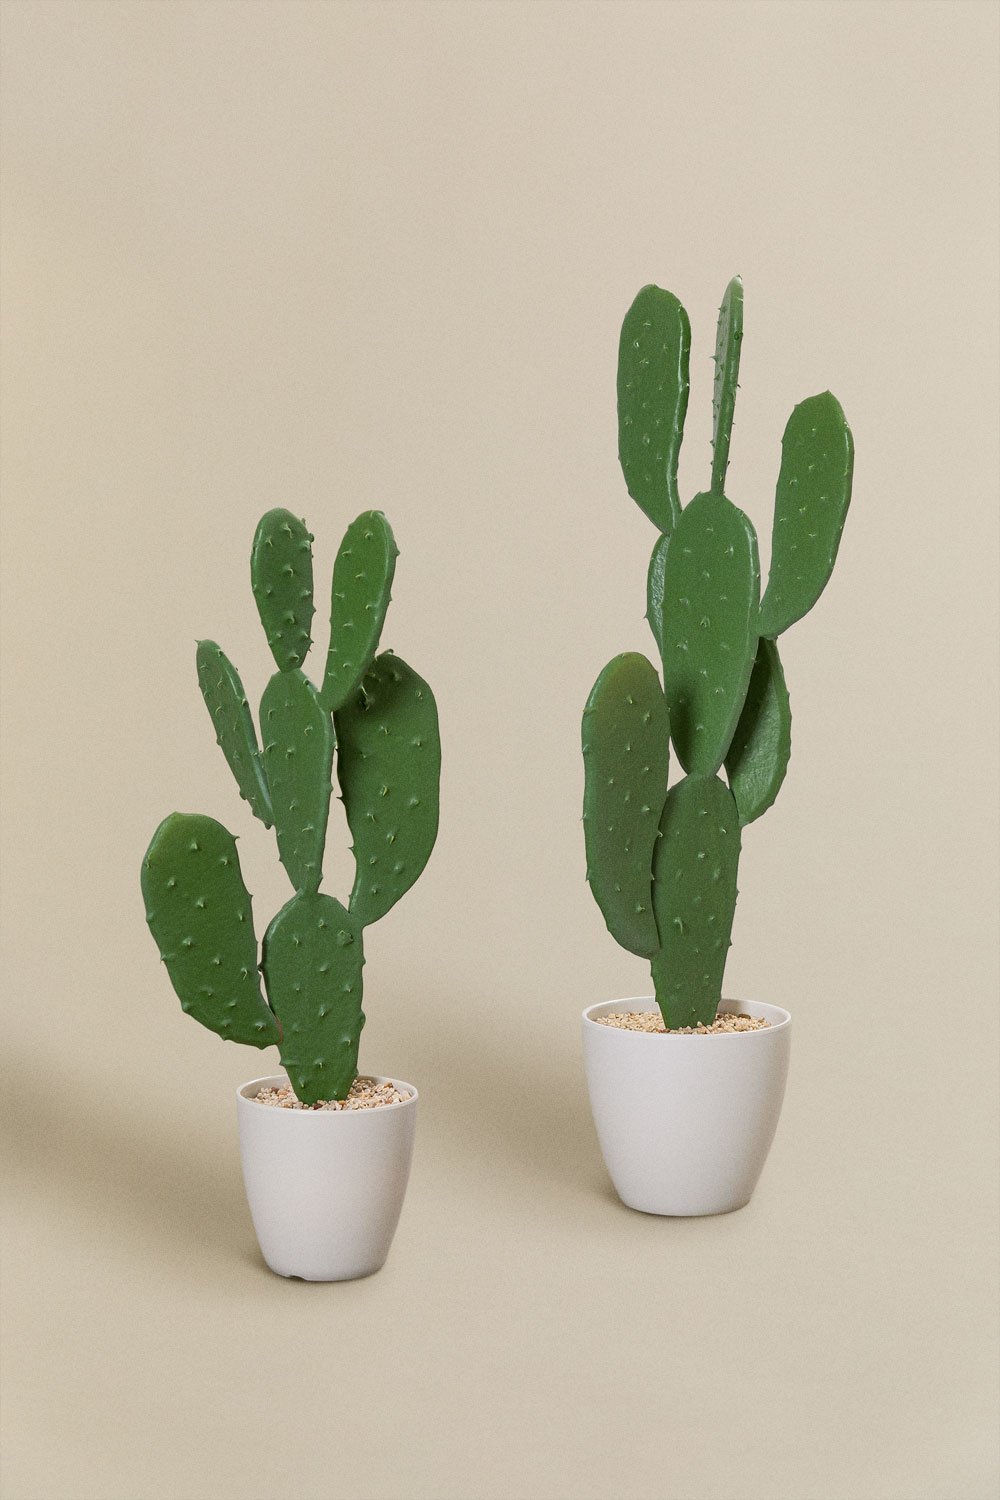 Acquista Utile melammina ornamentale di cactus artificiale